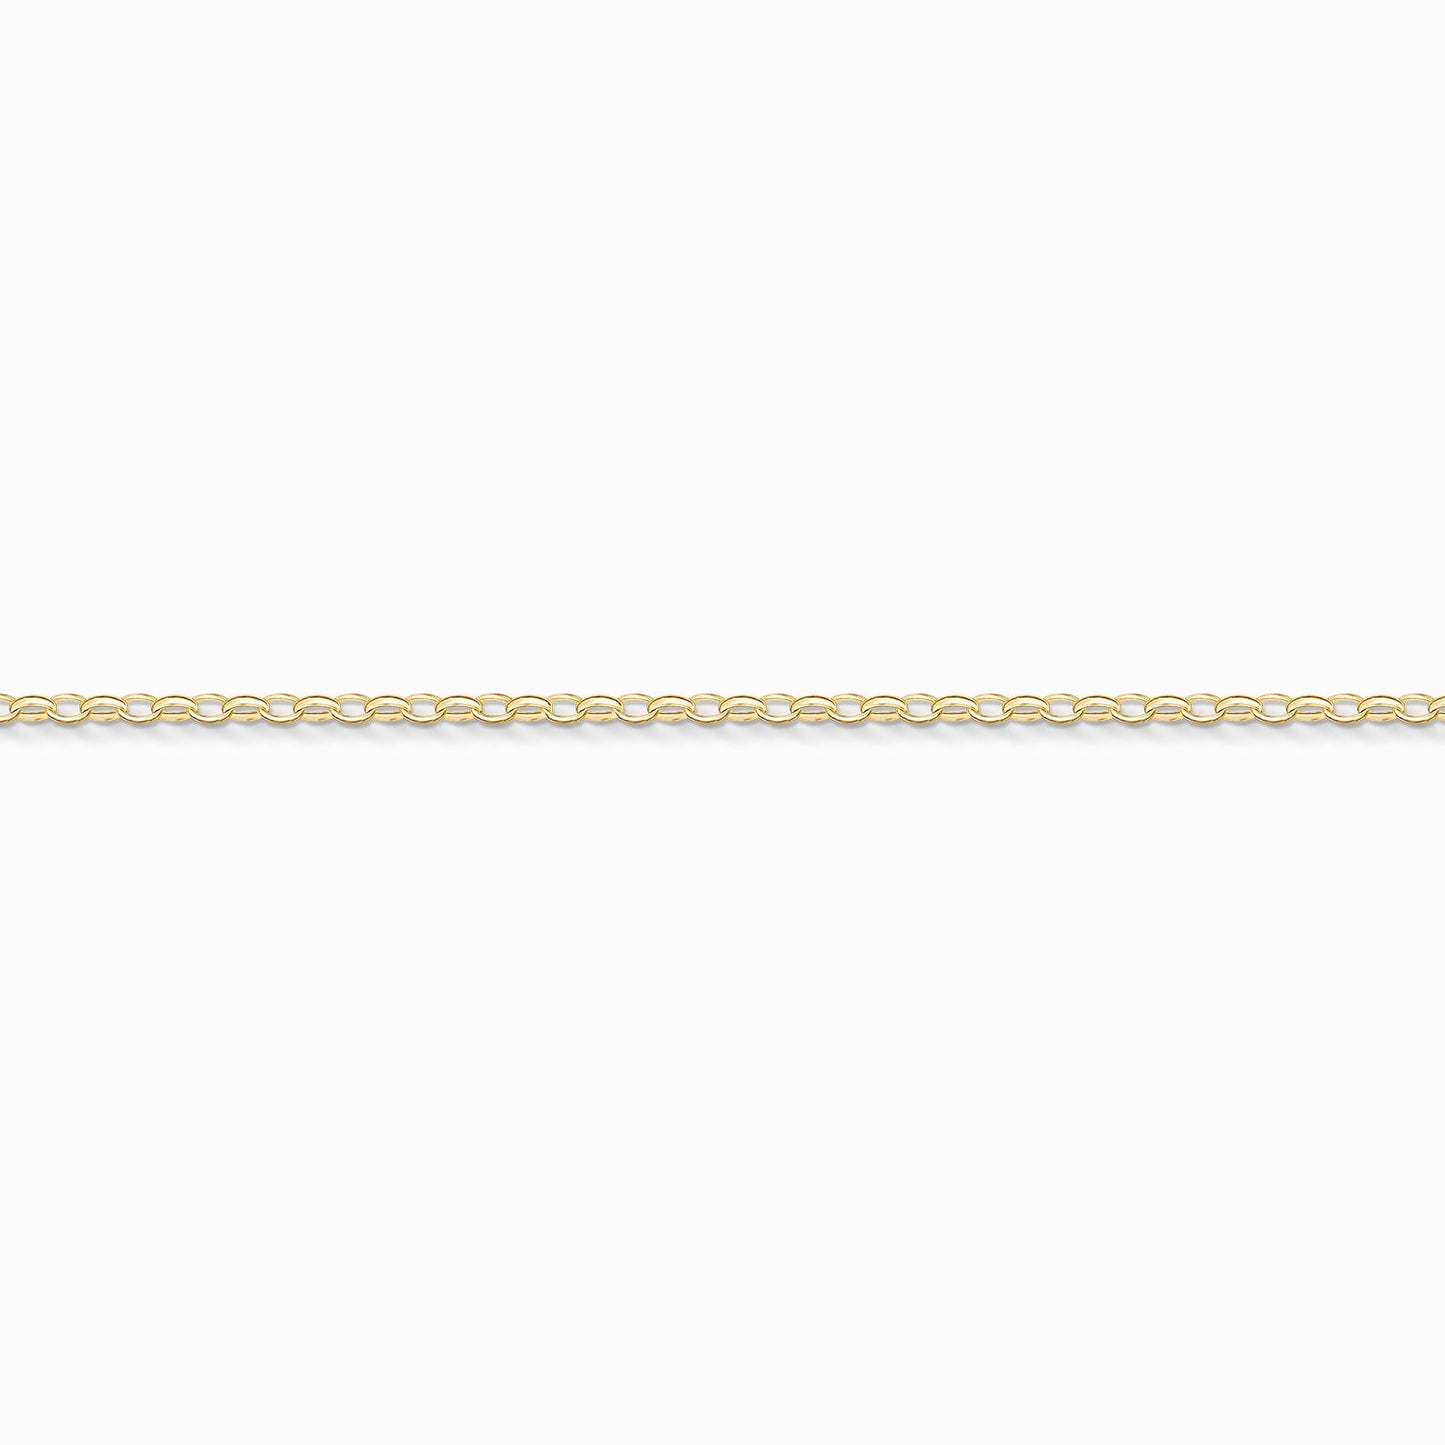 Thomas Sabo Yellow Gold-Plated Charm Bracelet  X0243-413-39 18.5cm